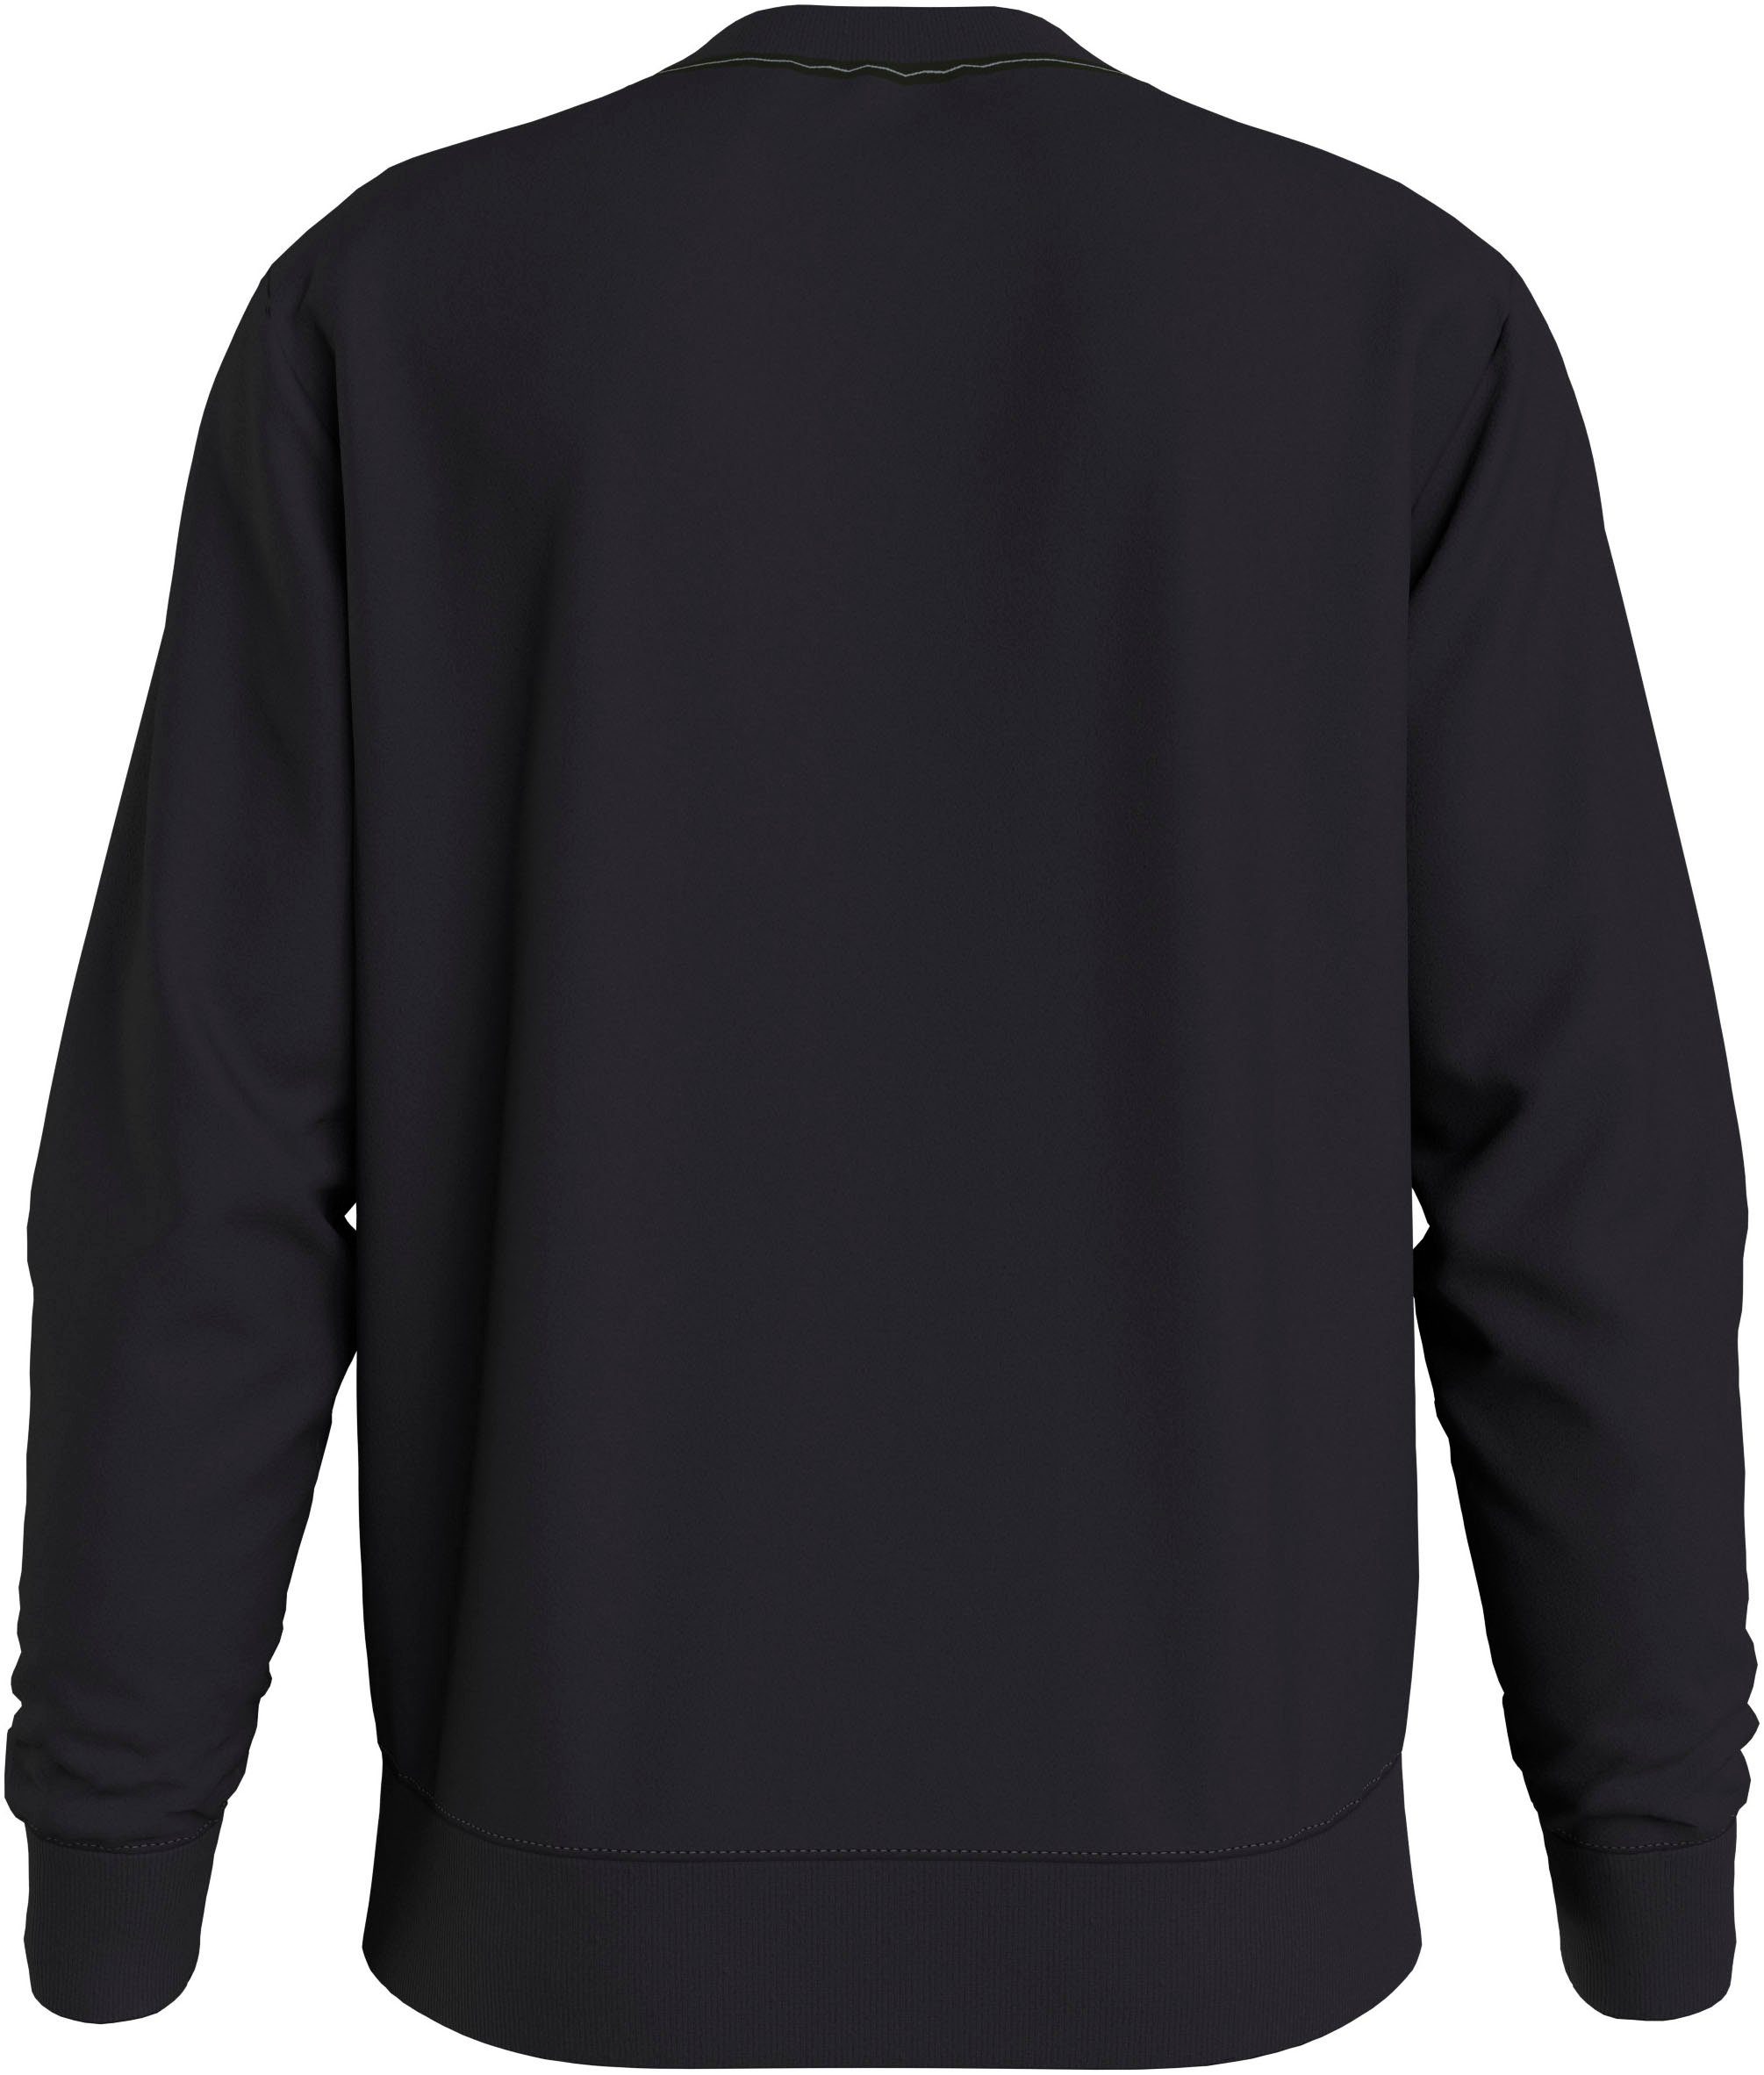 Calvin Klein Jeans Sweatshirt VARSITY NECK CREW CURVE Ck Black